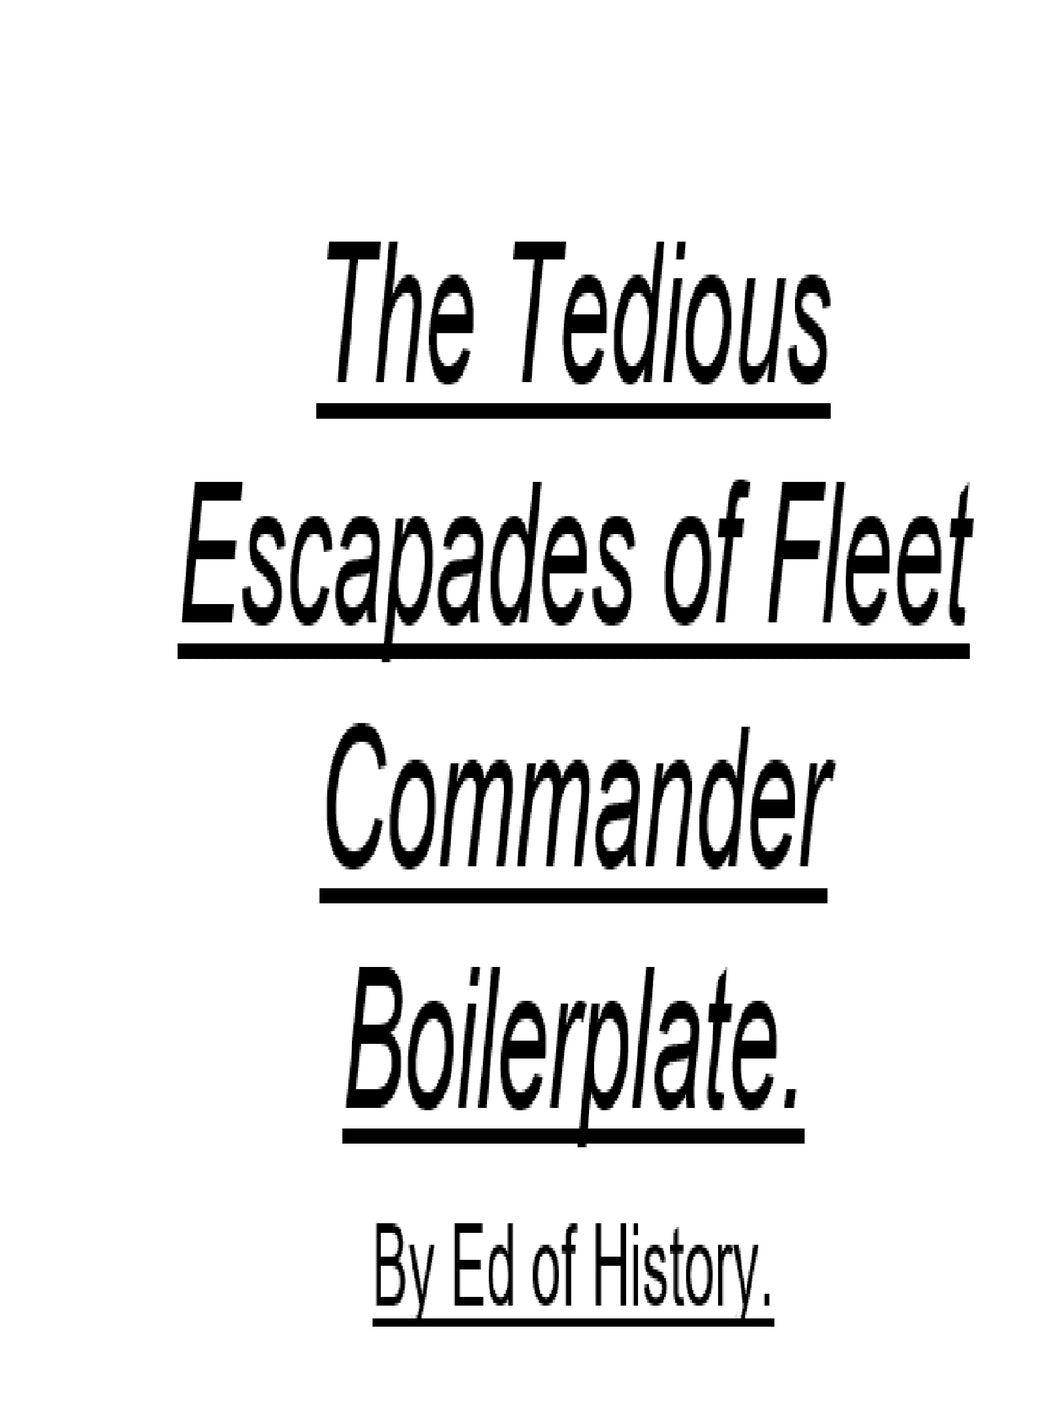 The Tedious Escapades of Fleet Commander Boilerplate.